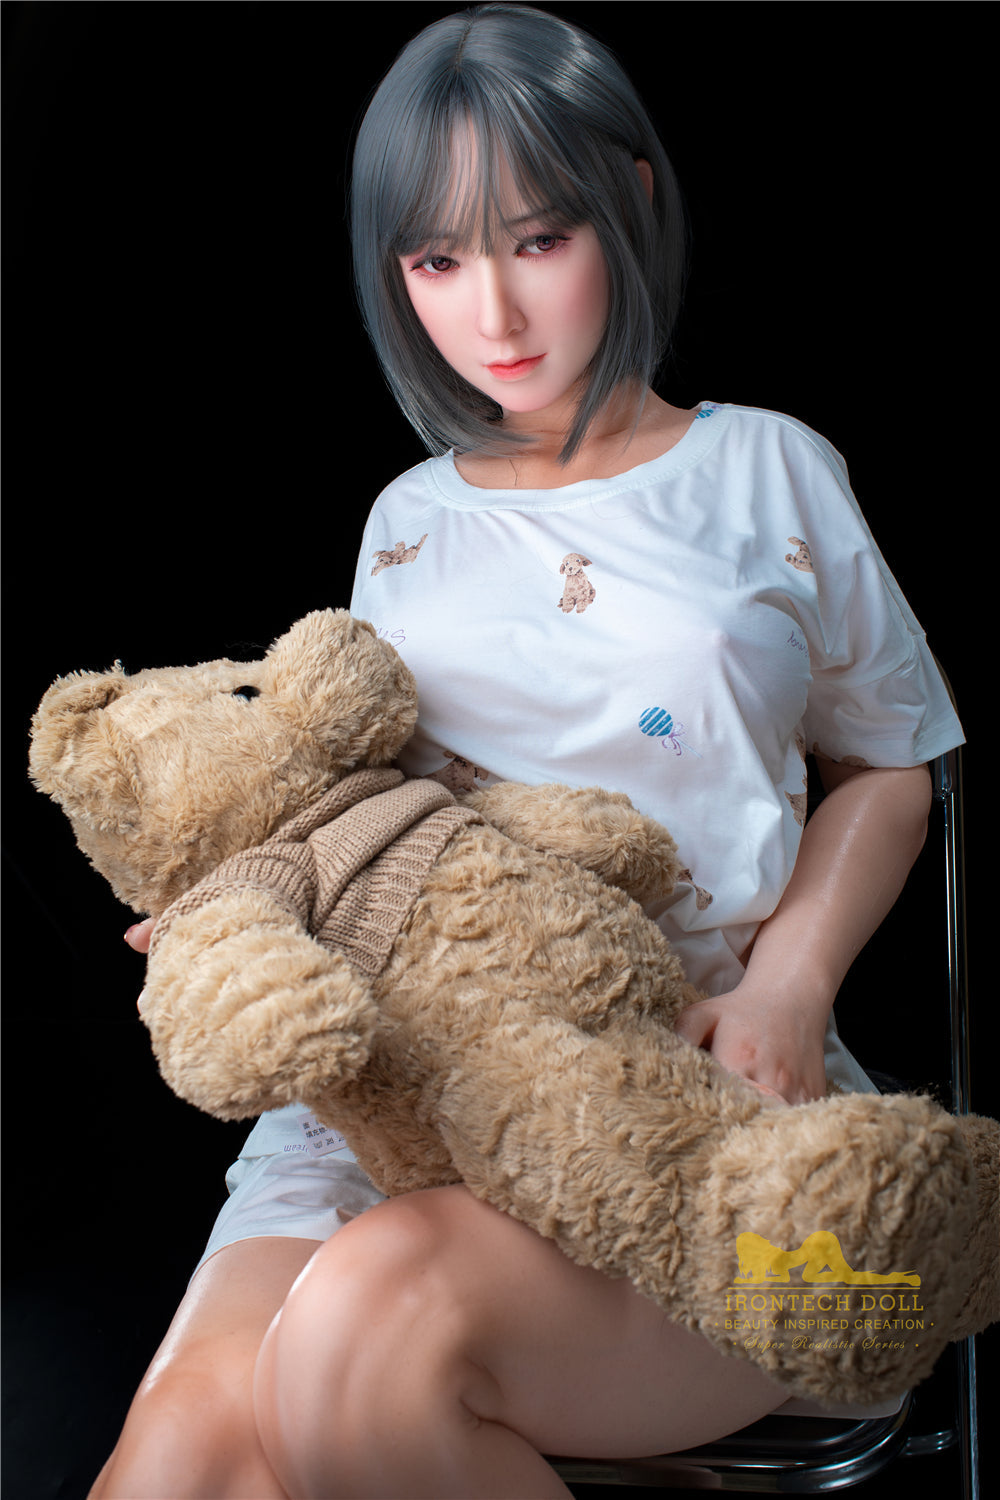 Irontech Doll 165 cm Silicone - Erin | Sex Dolls SG